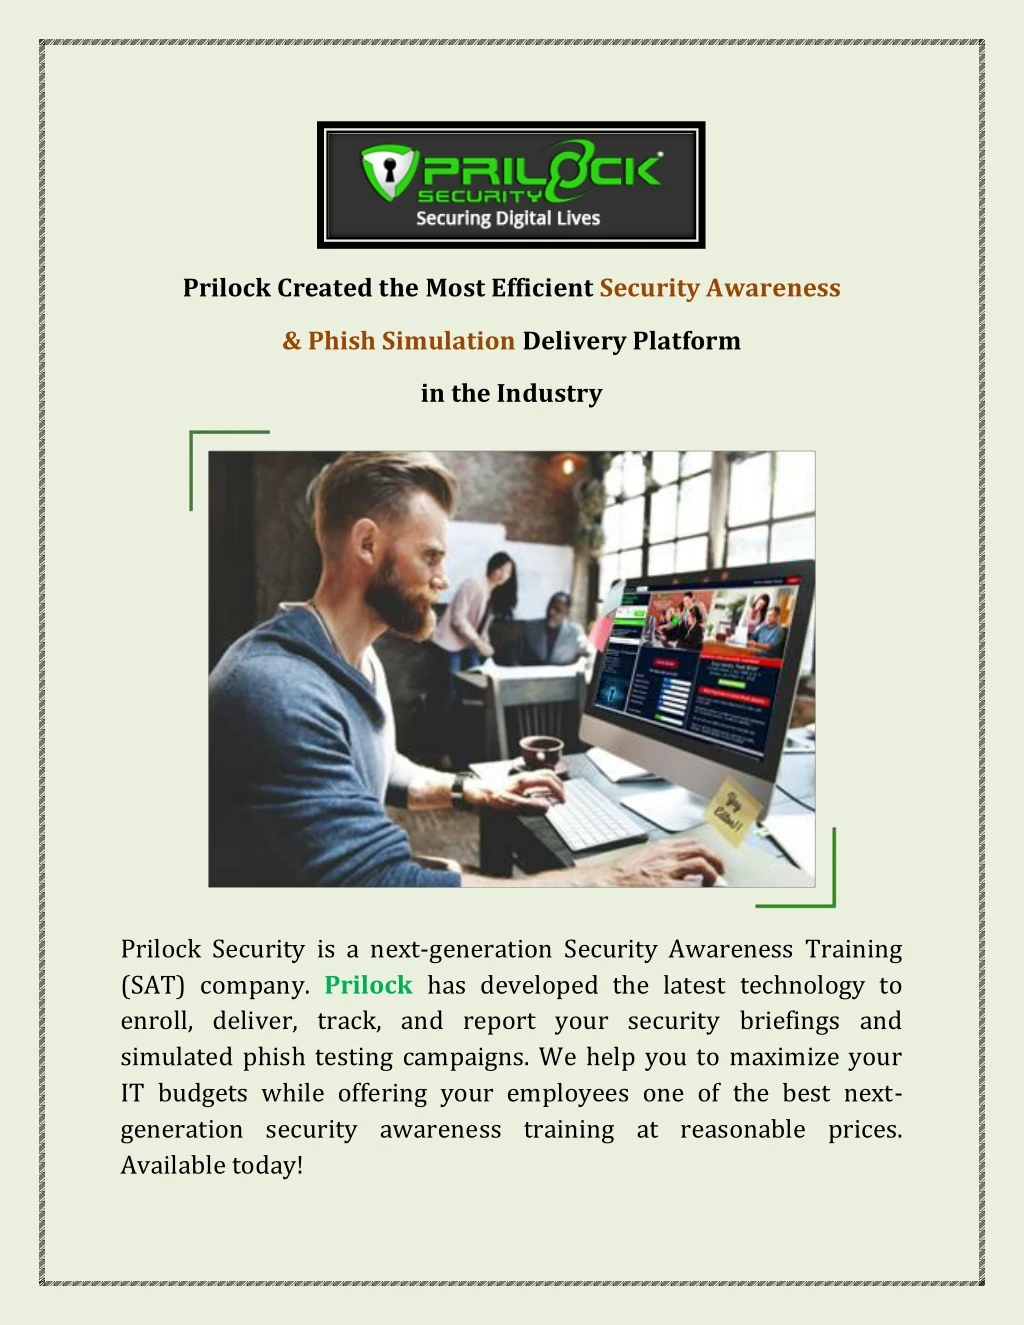 prilock created the most efficient security